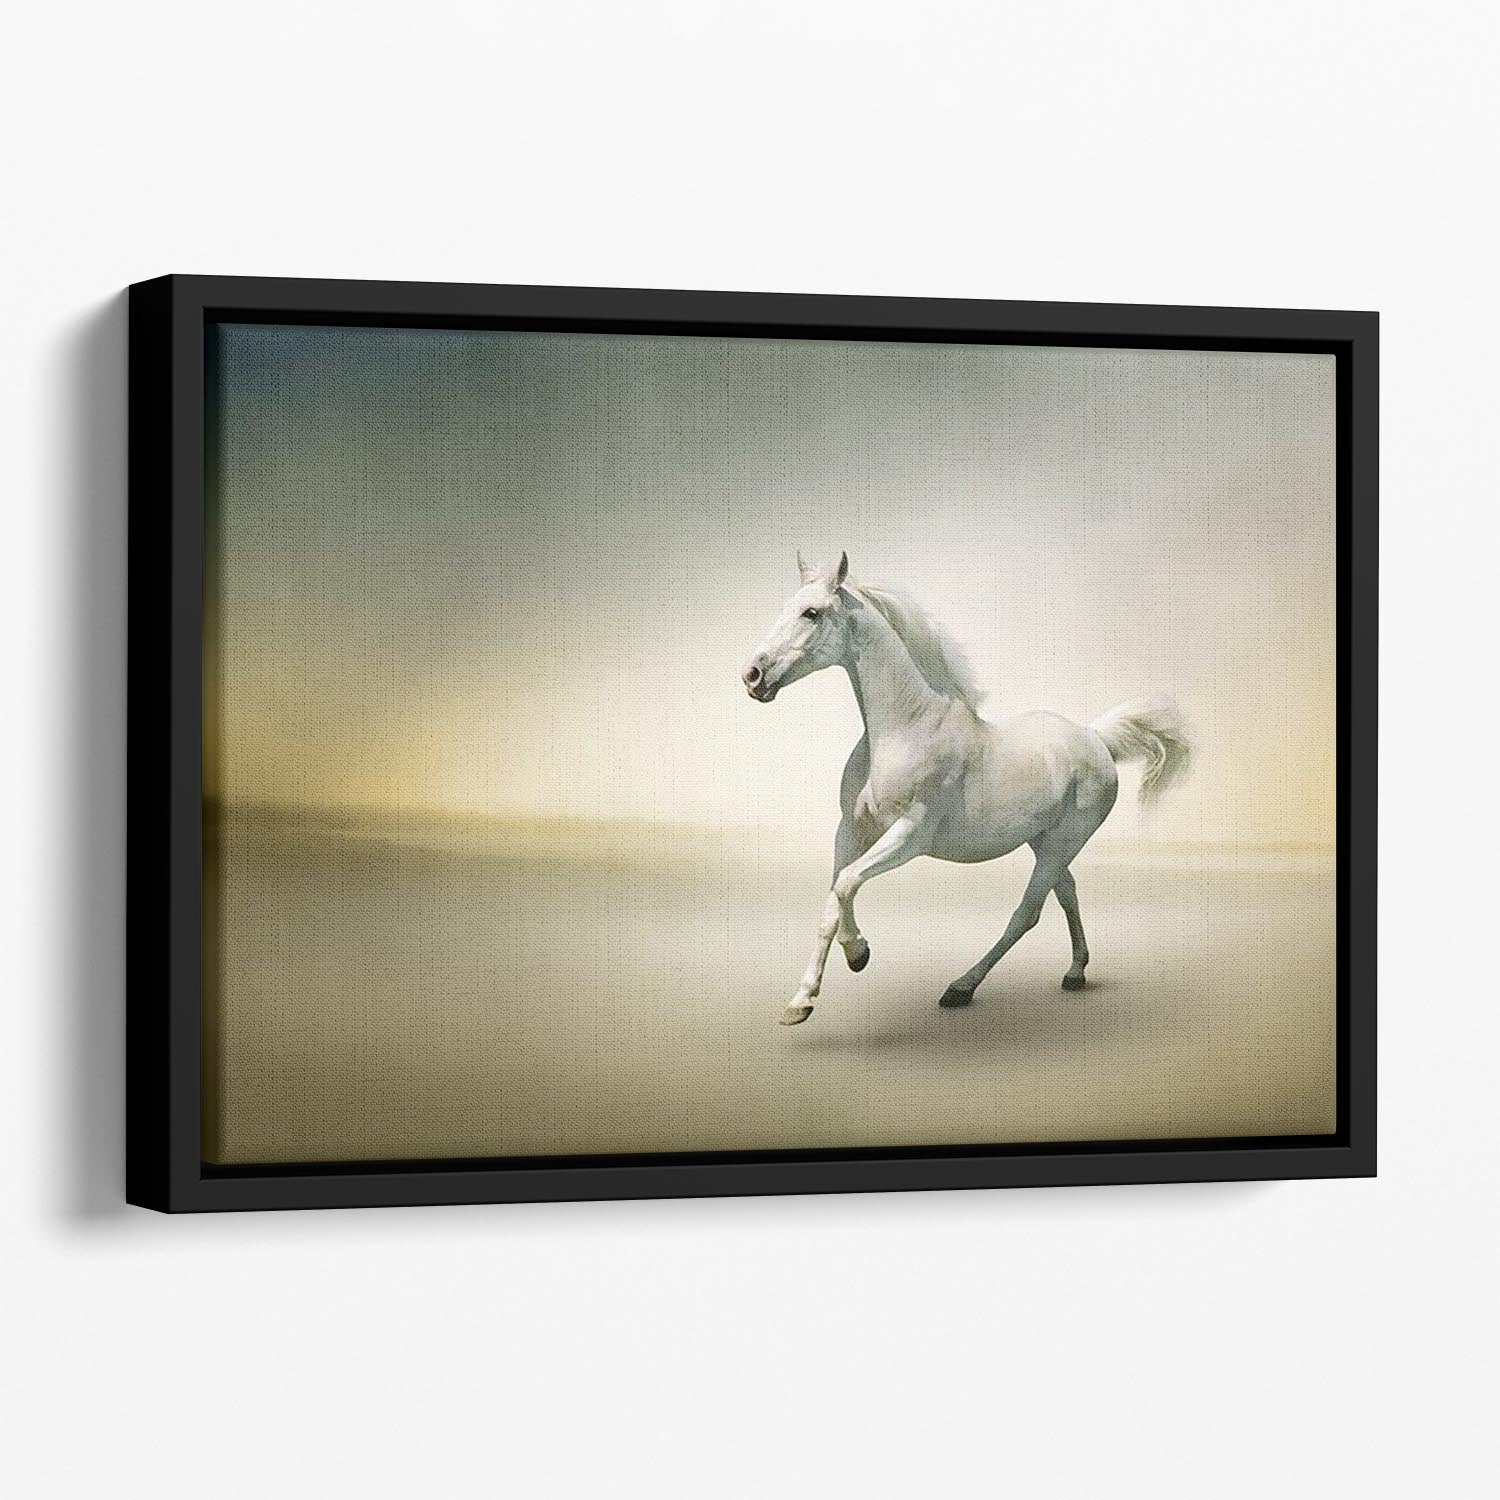 White horse in motion Floating Framed Canvas - Canvas Art Rocks - 1